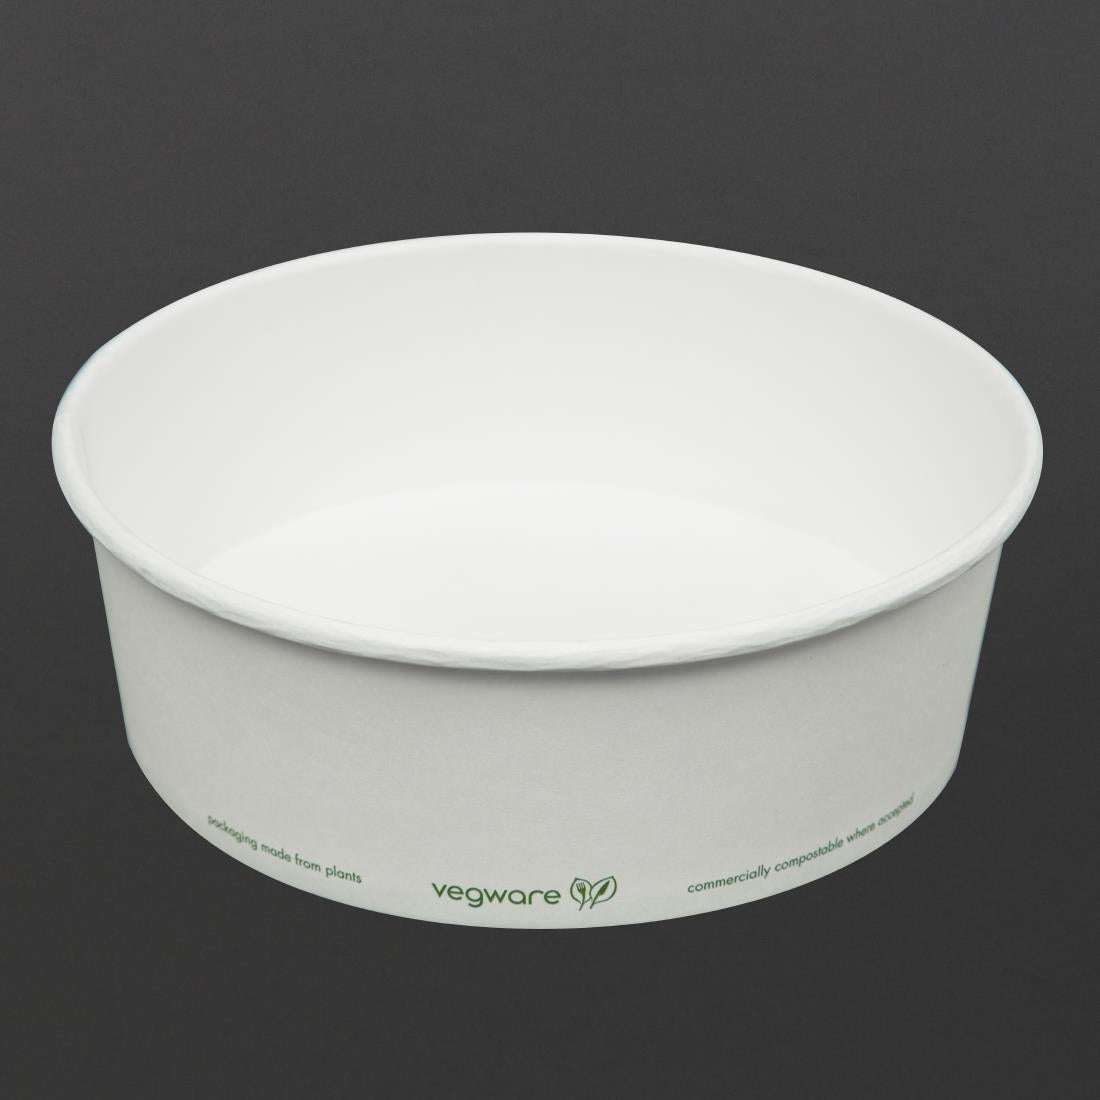 FS177 Vegware 185-Series Compostable Bon Appetit Wide PLA-lined Paper Food Bowls 32oz (Pack of 300) JD Catering Equipment Solutions Ltd